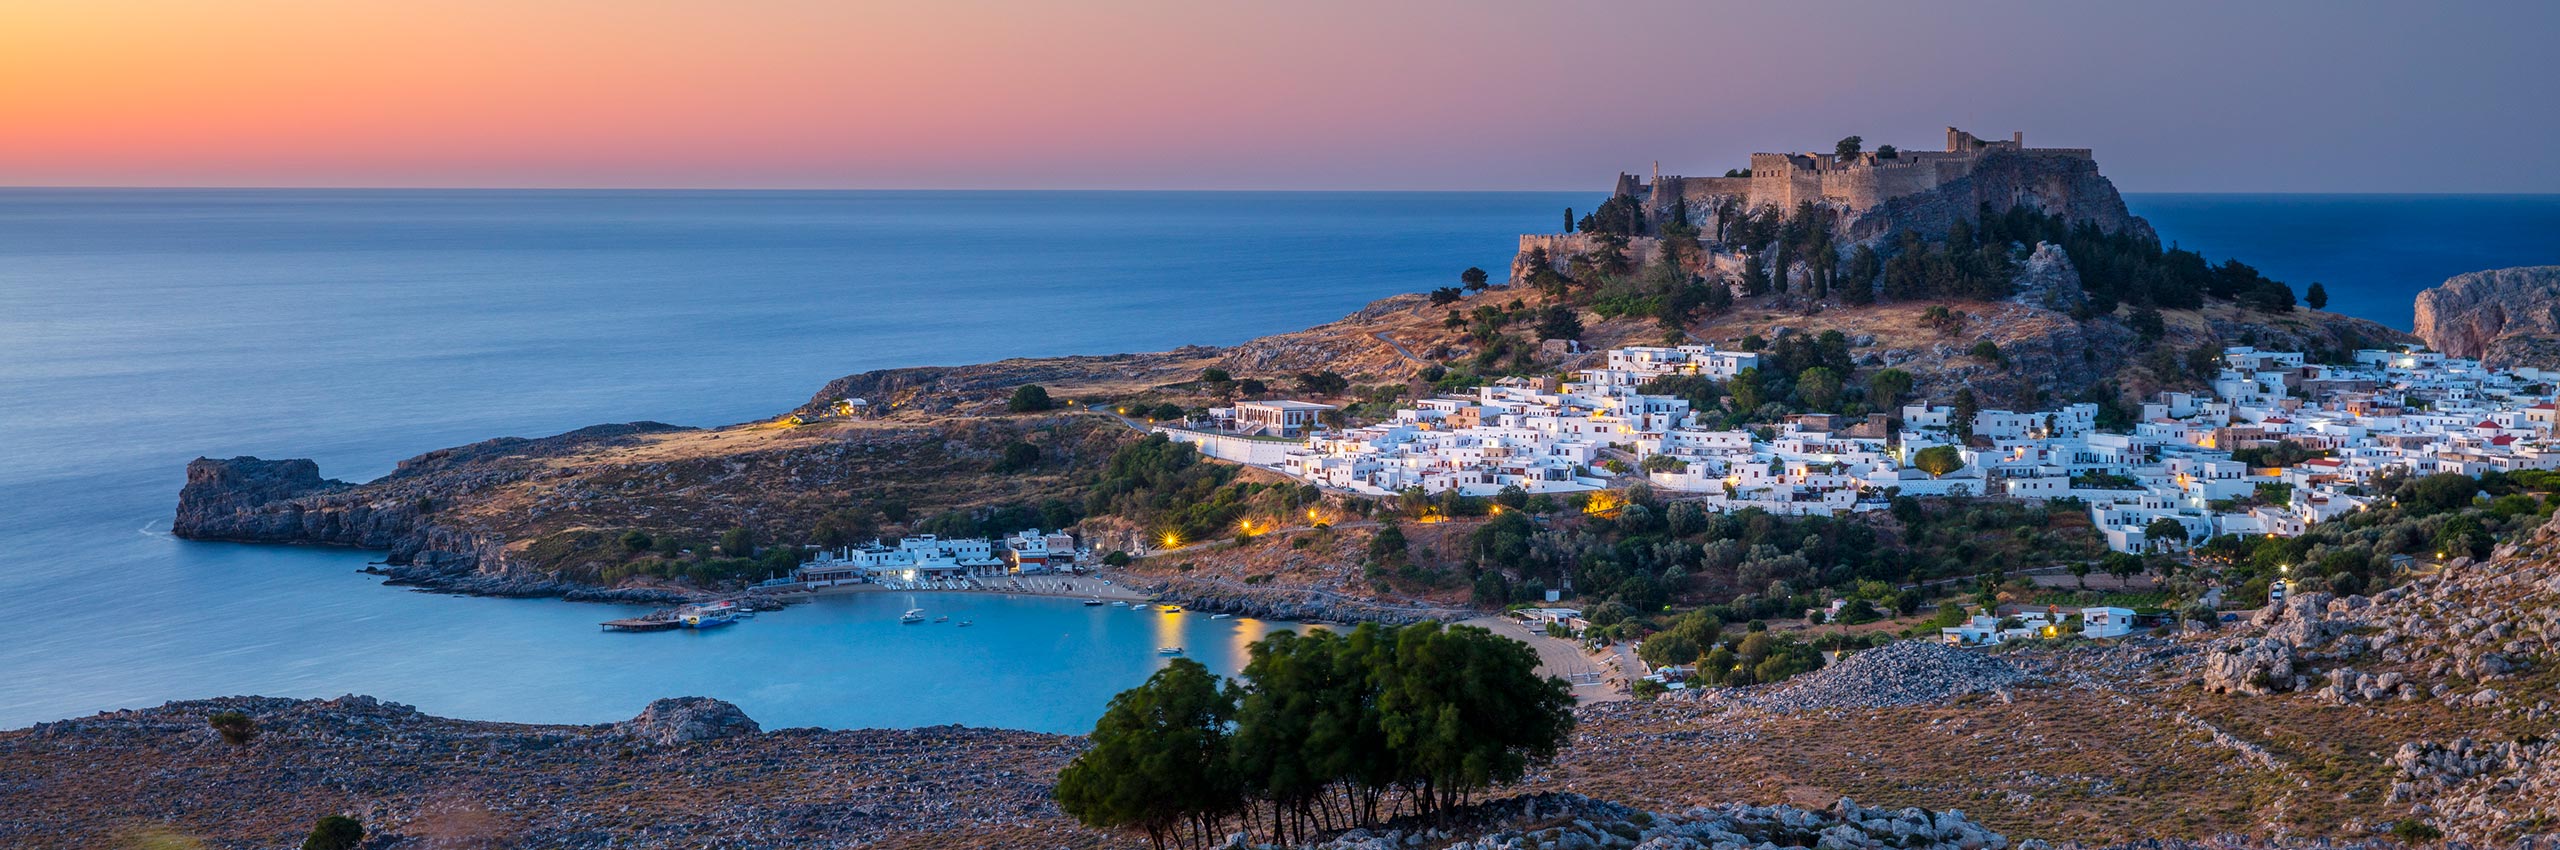 SIM-1155510 | Greece/Aegean islands, Dodecanese, Rhodes island, Lindos | © Massimo Ripani/4Corners